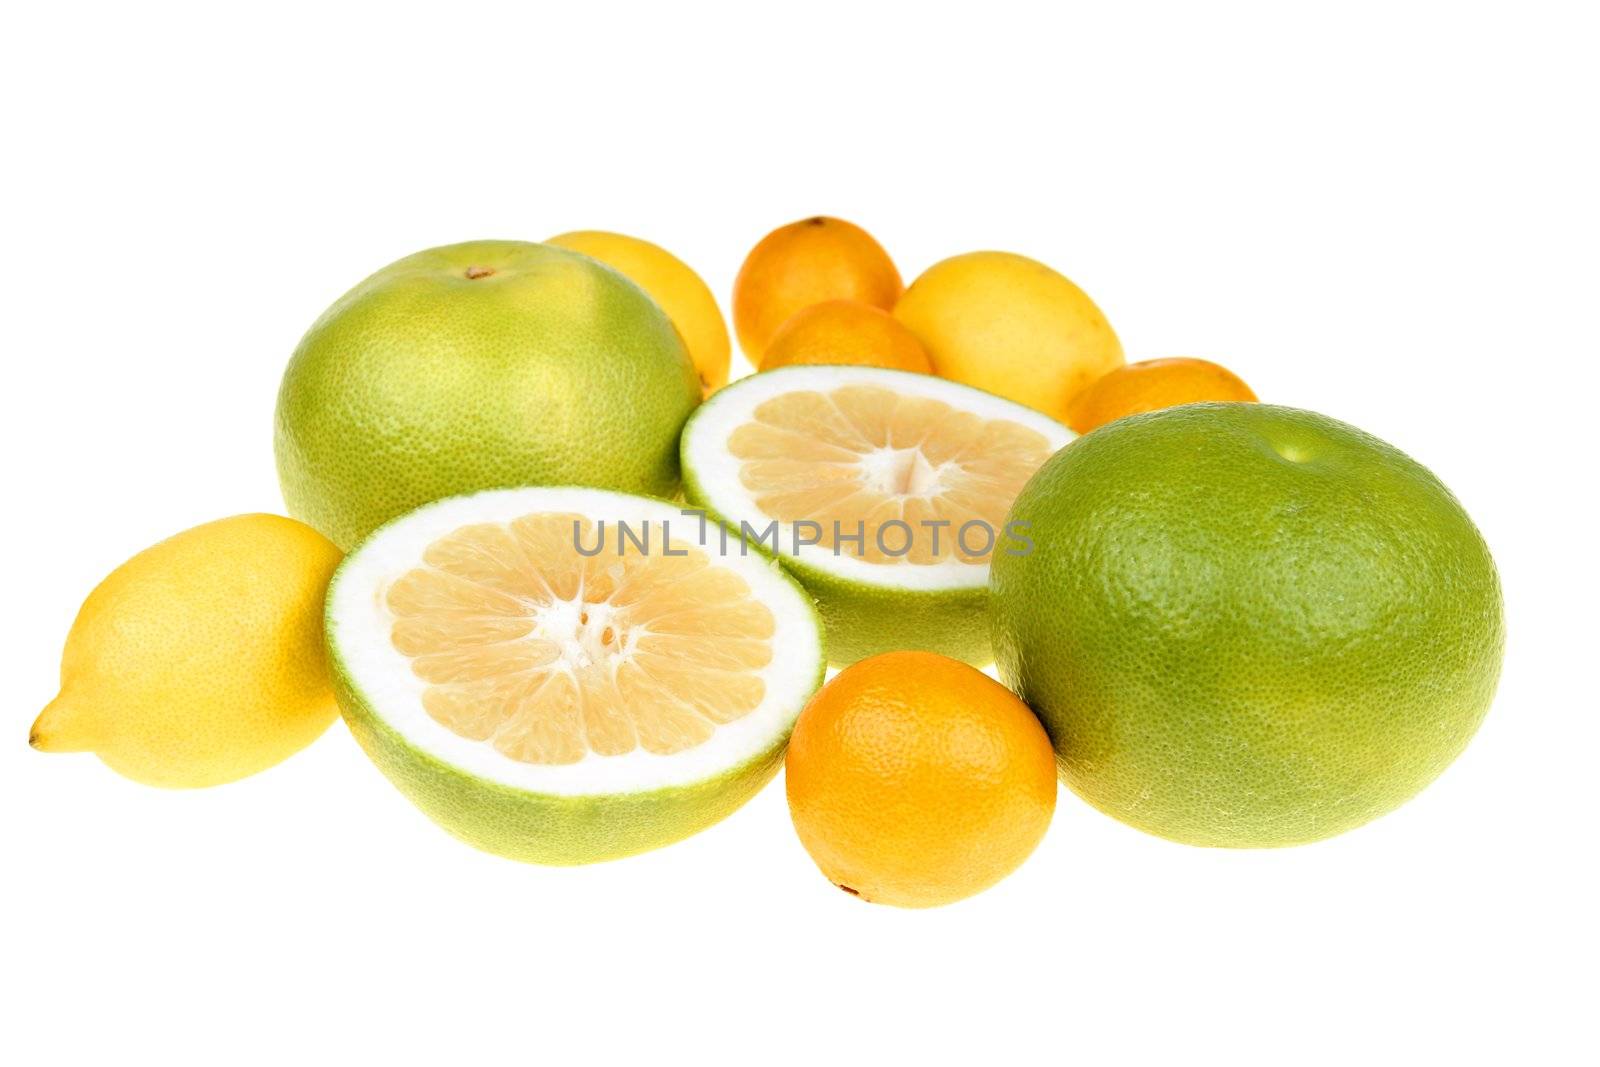  Big green grapefruits,lemon and mandarines close-up on white background